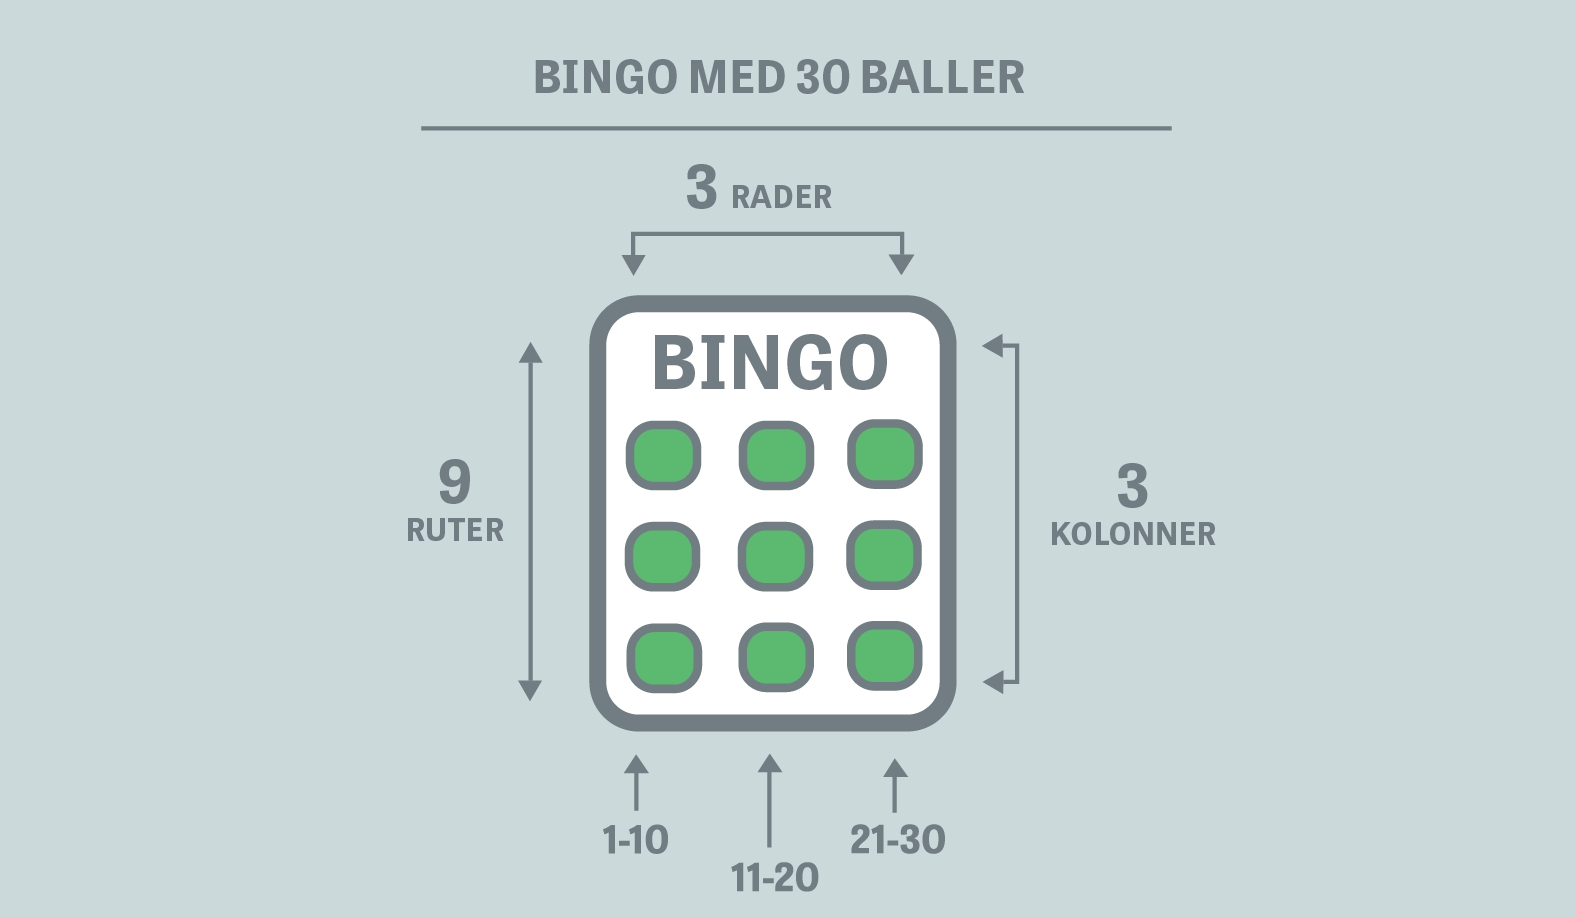 30 baller bingo